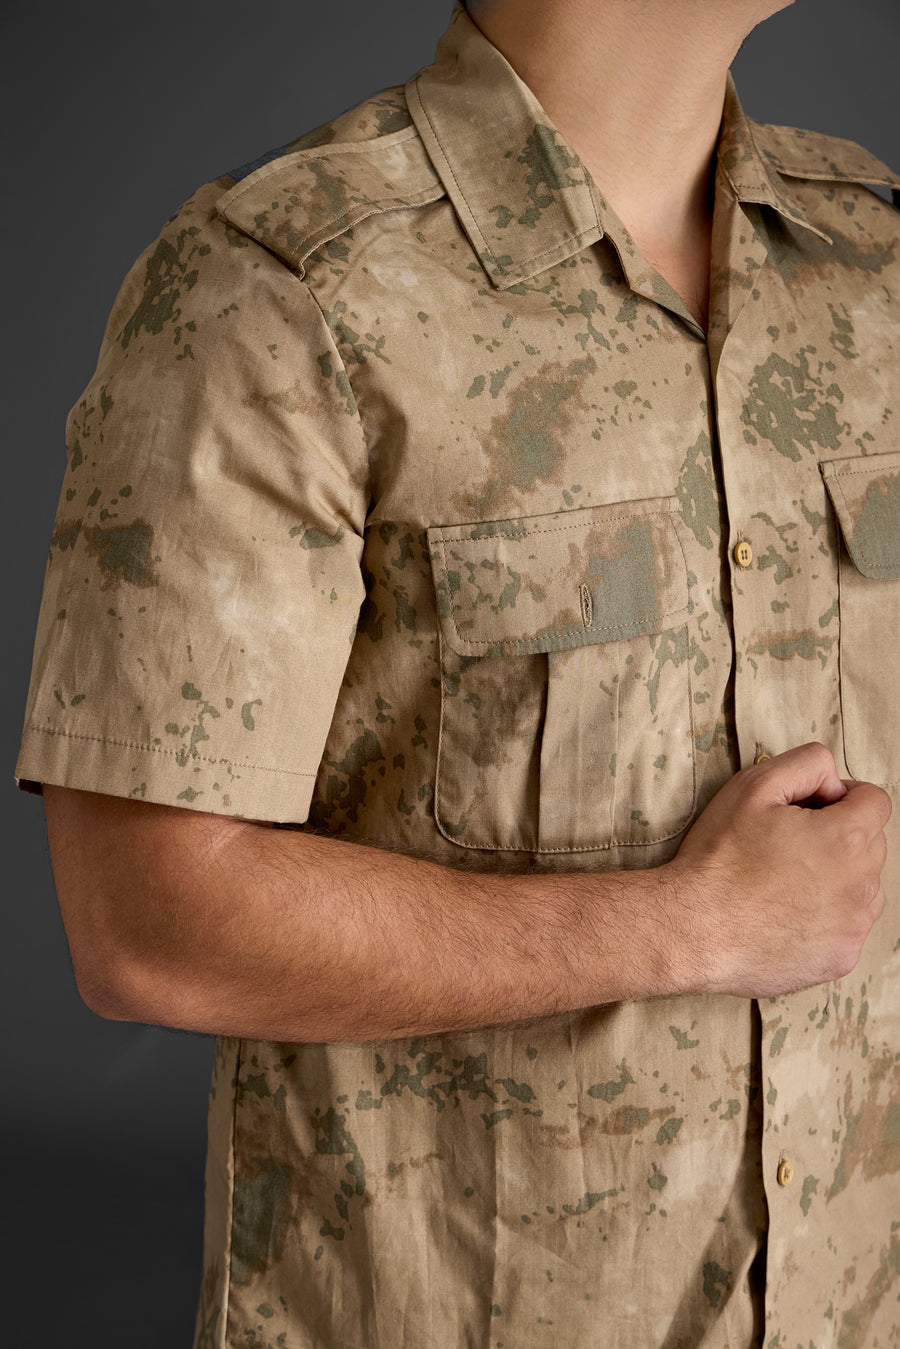 Desert Camouflage Ripstop Shirt - Designed for Gendarmerie Forces